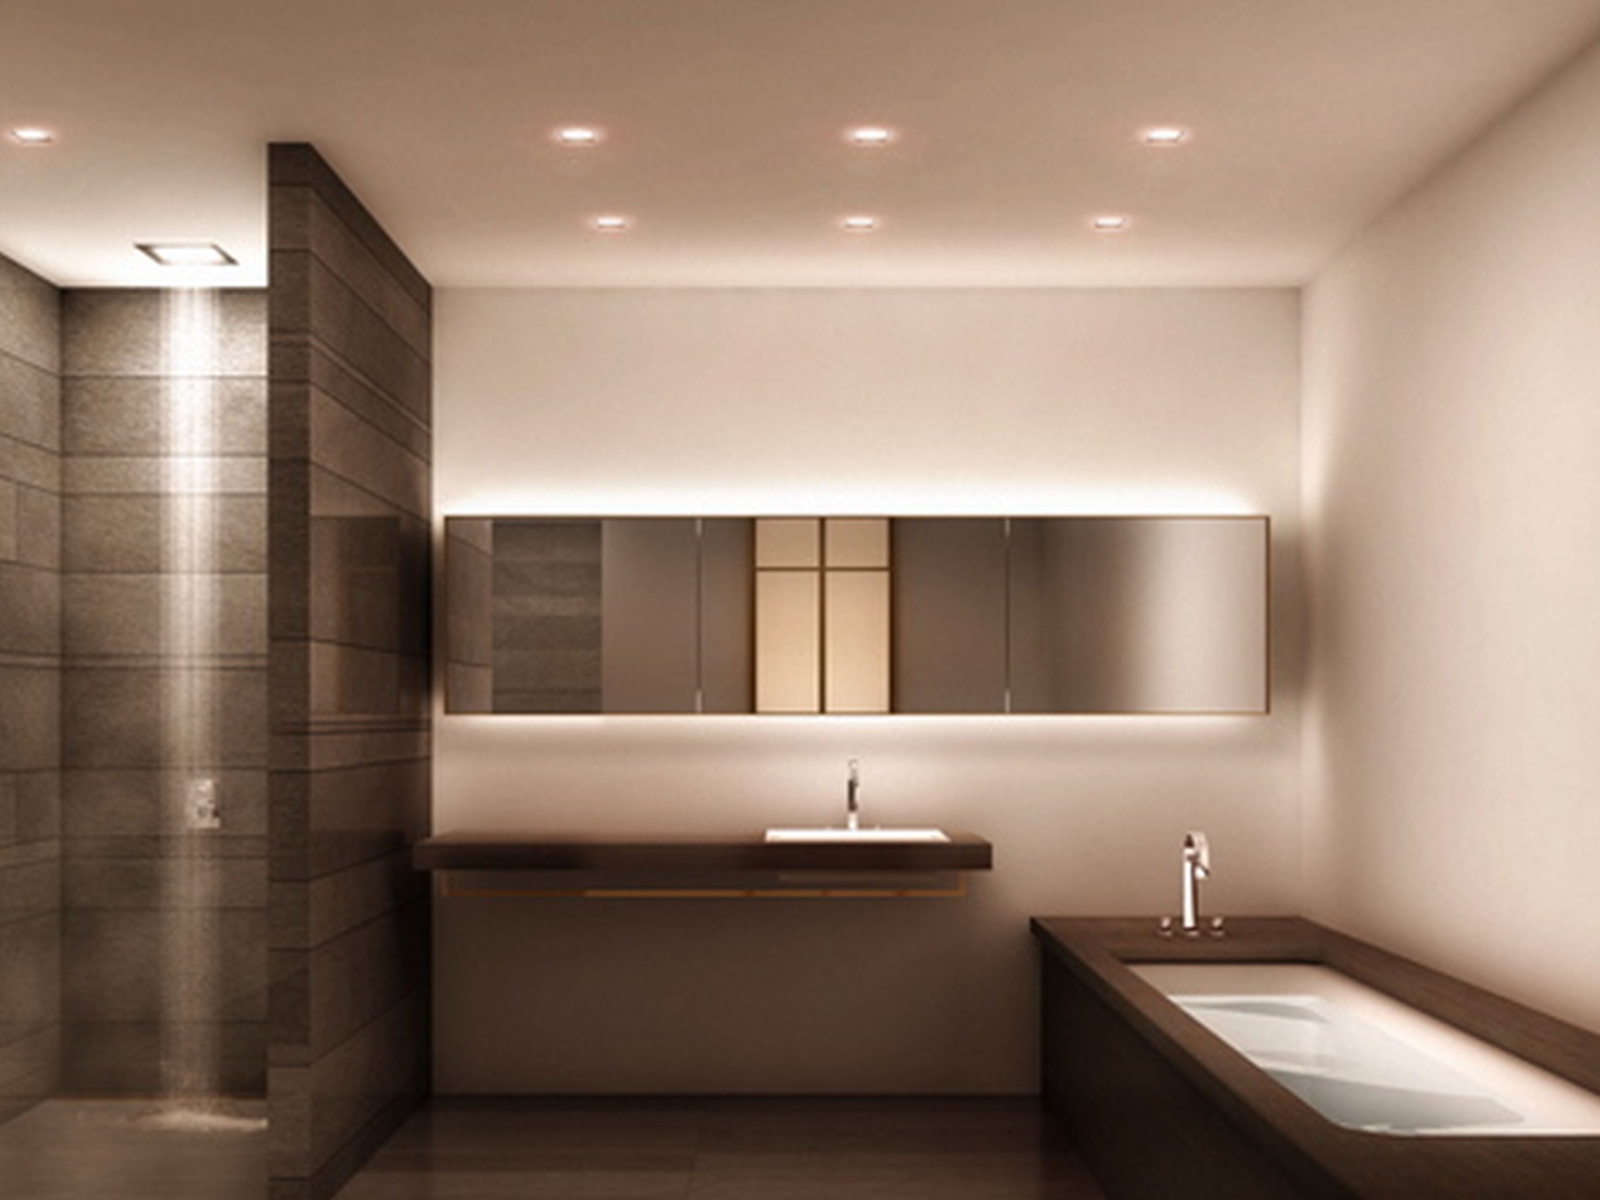 Gorgeous bathroom design